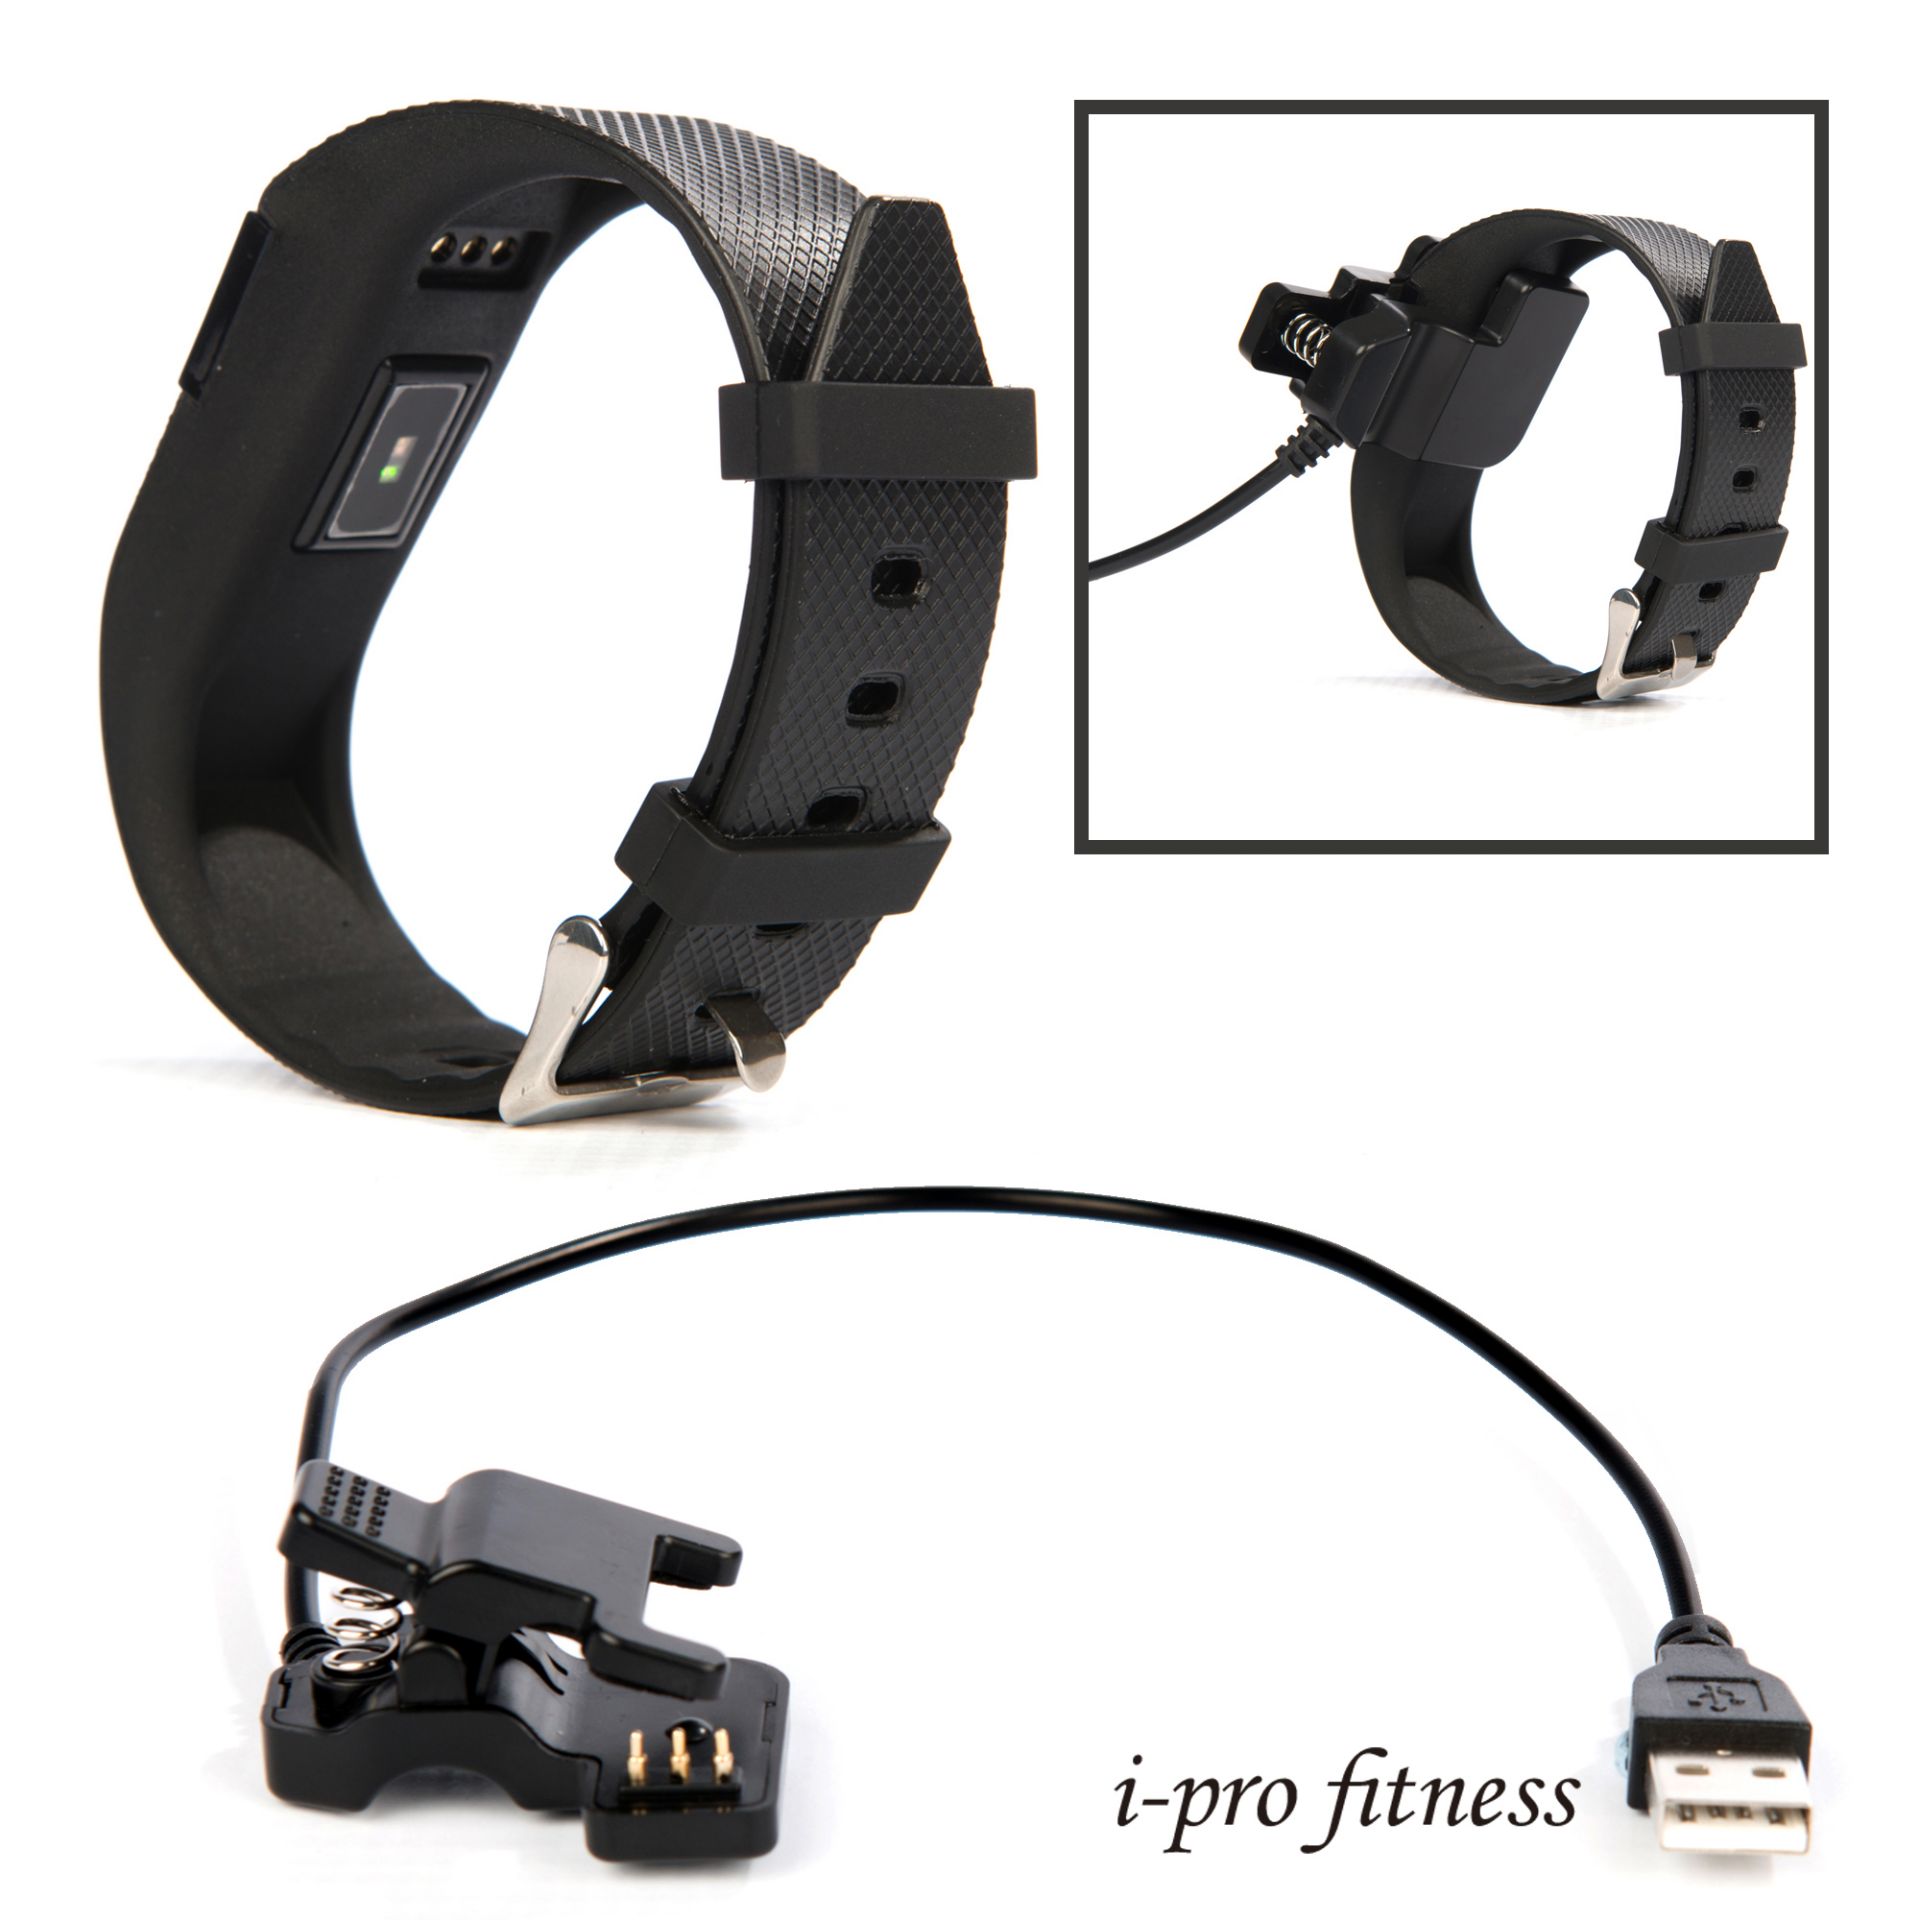 10x Fitness Tracker i-pro fitness, Bluetooth 4.0 Sports Smart Bracelet, Heart Rate Monitor, - Image 4 of 6